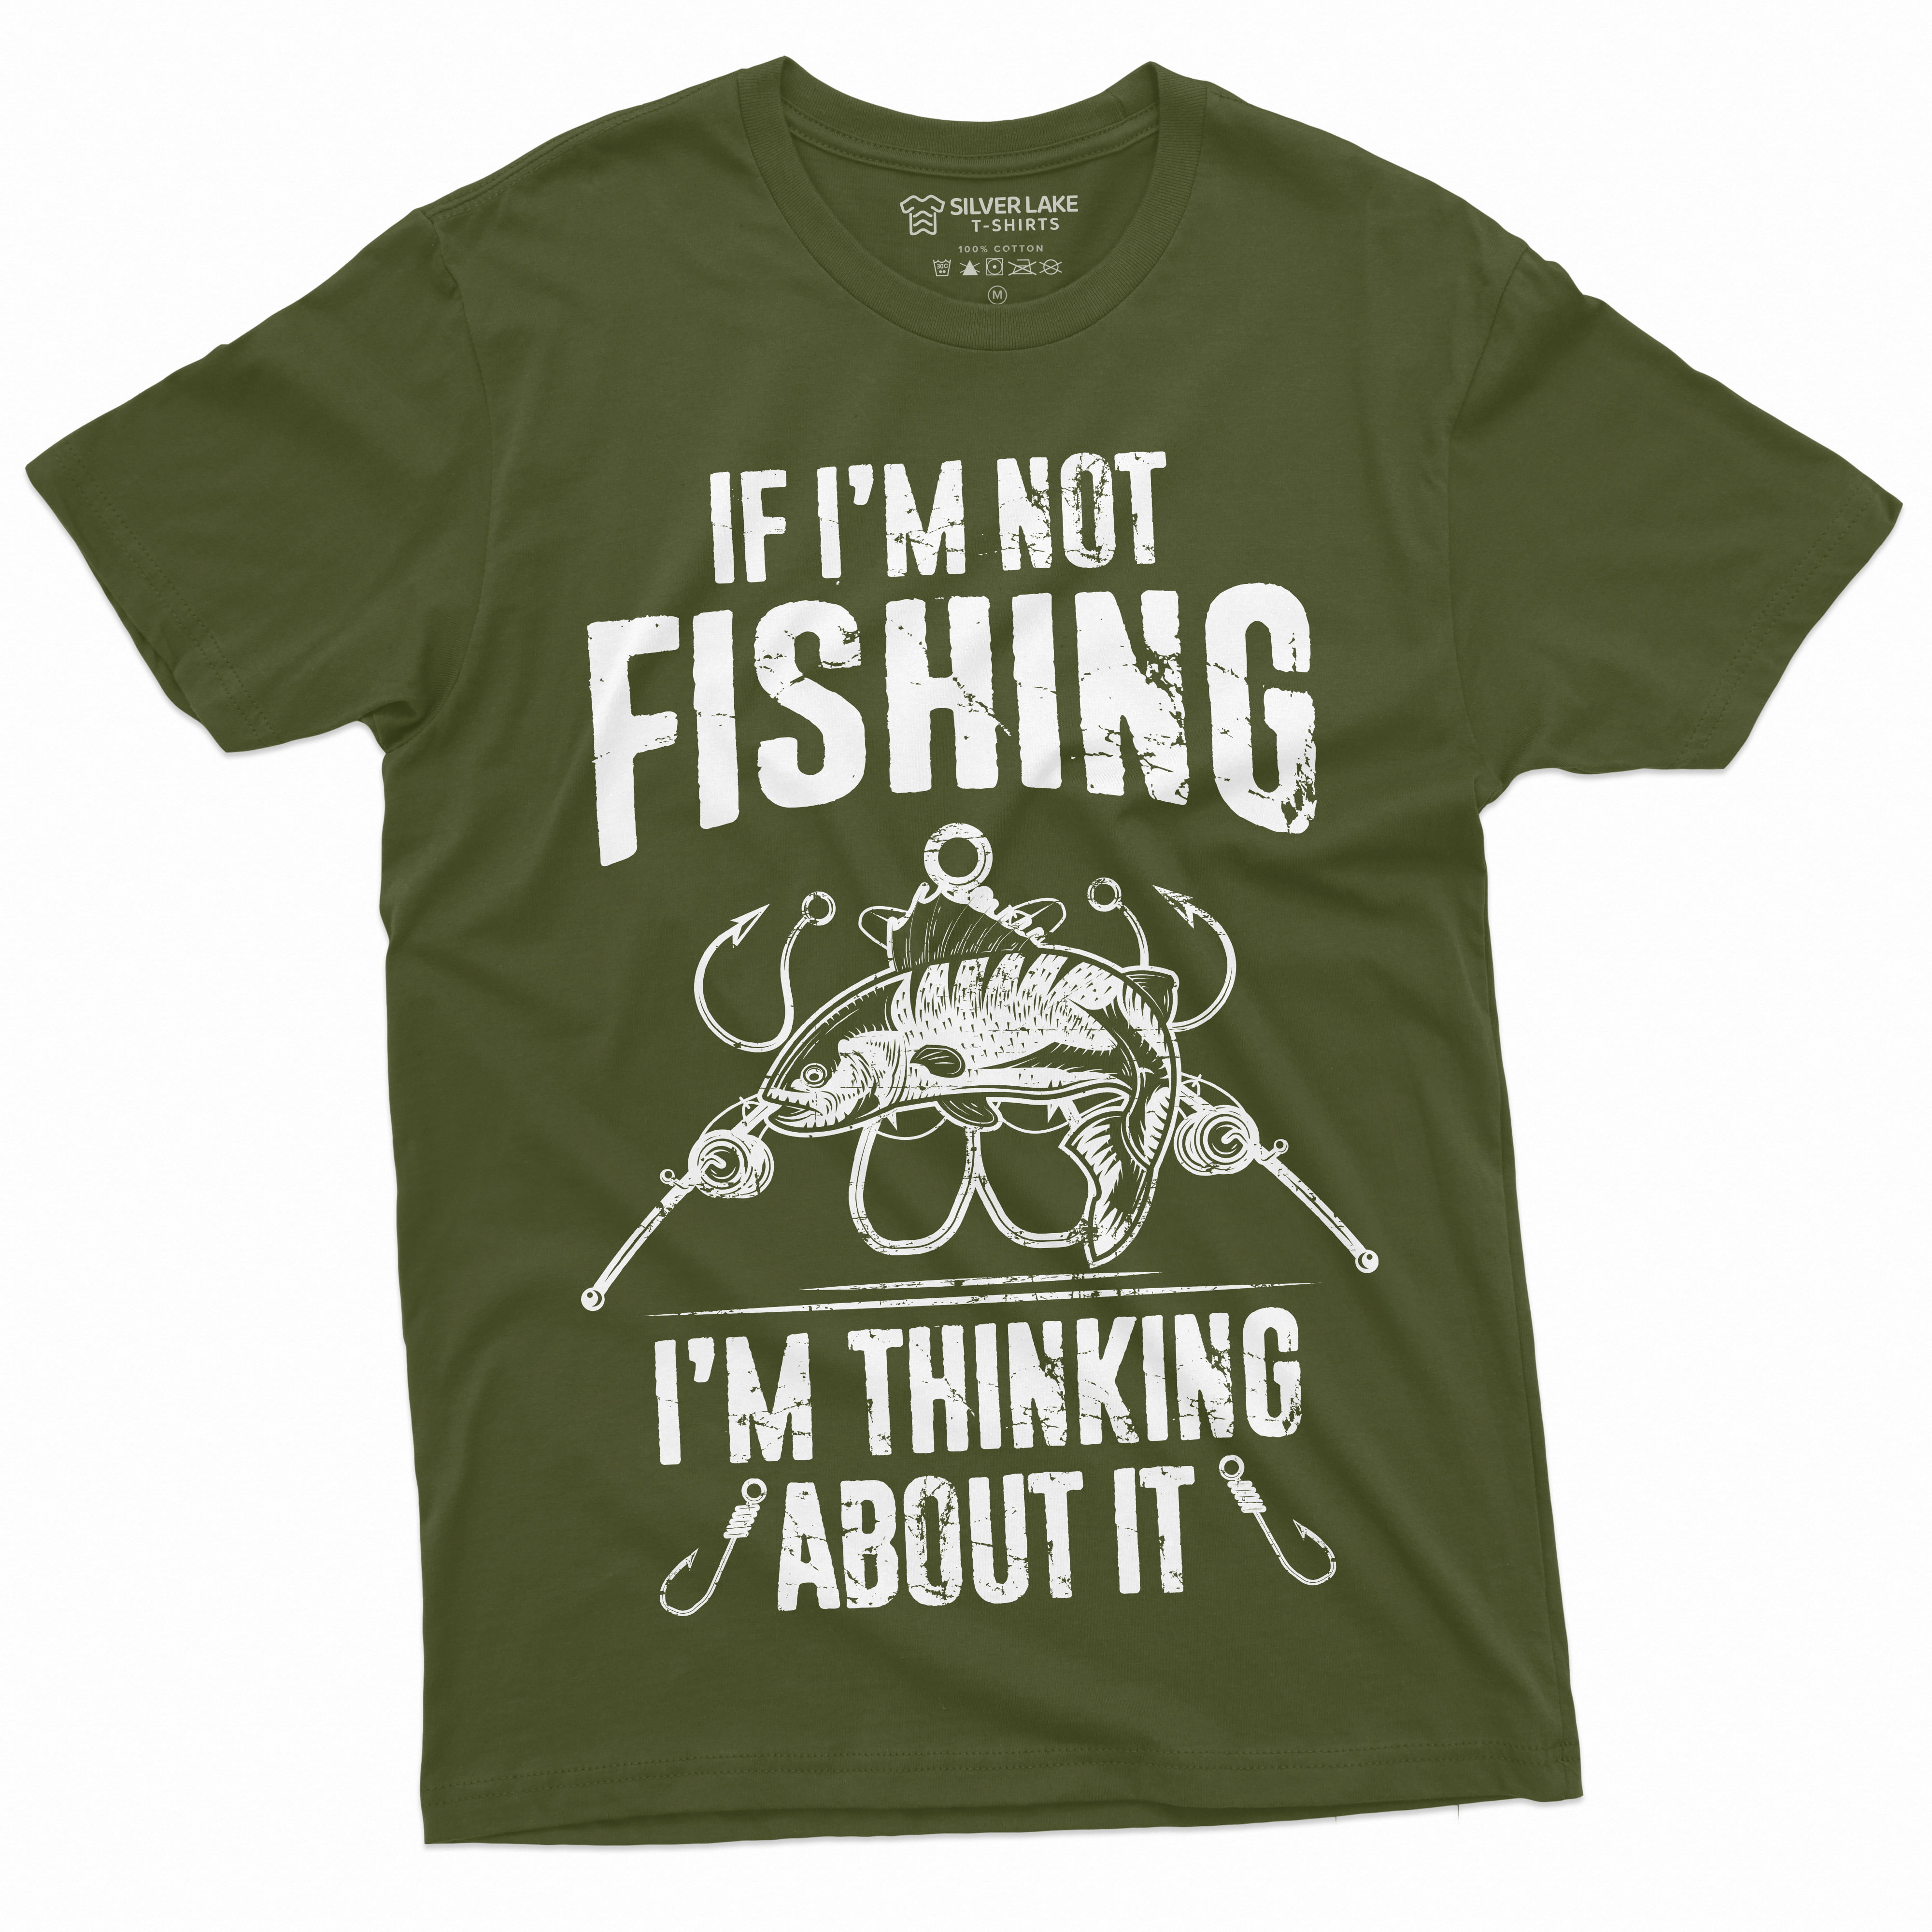 Hot Fisherman Funny - Funny Fishing Shirts Gift for Men - Graphic T-shirts